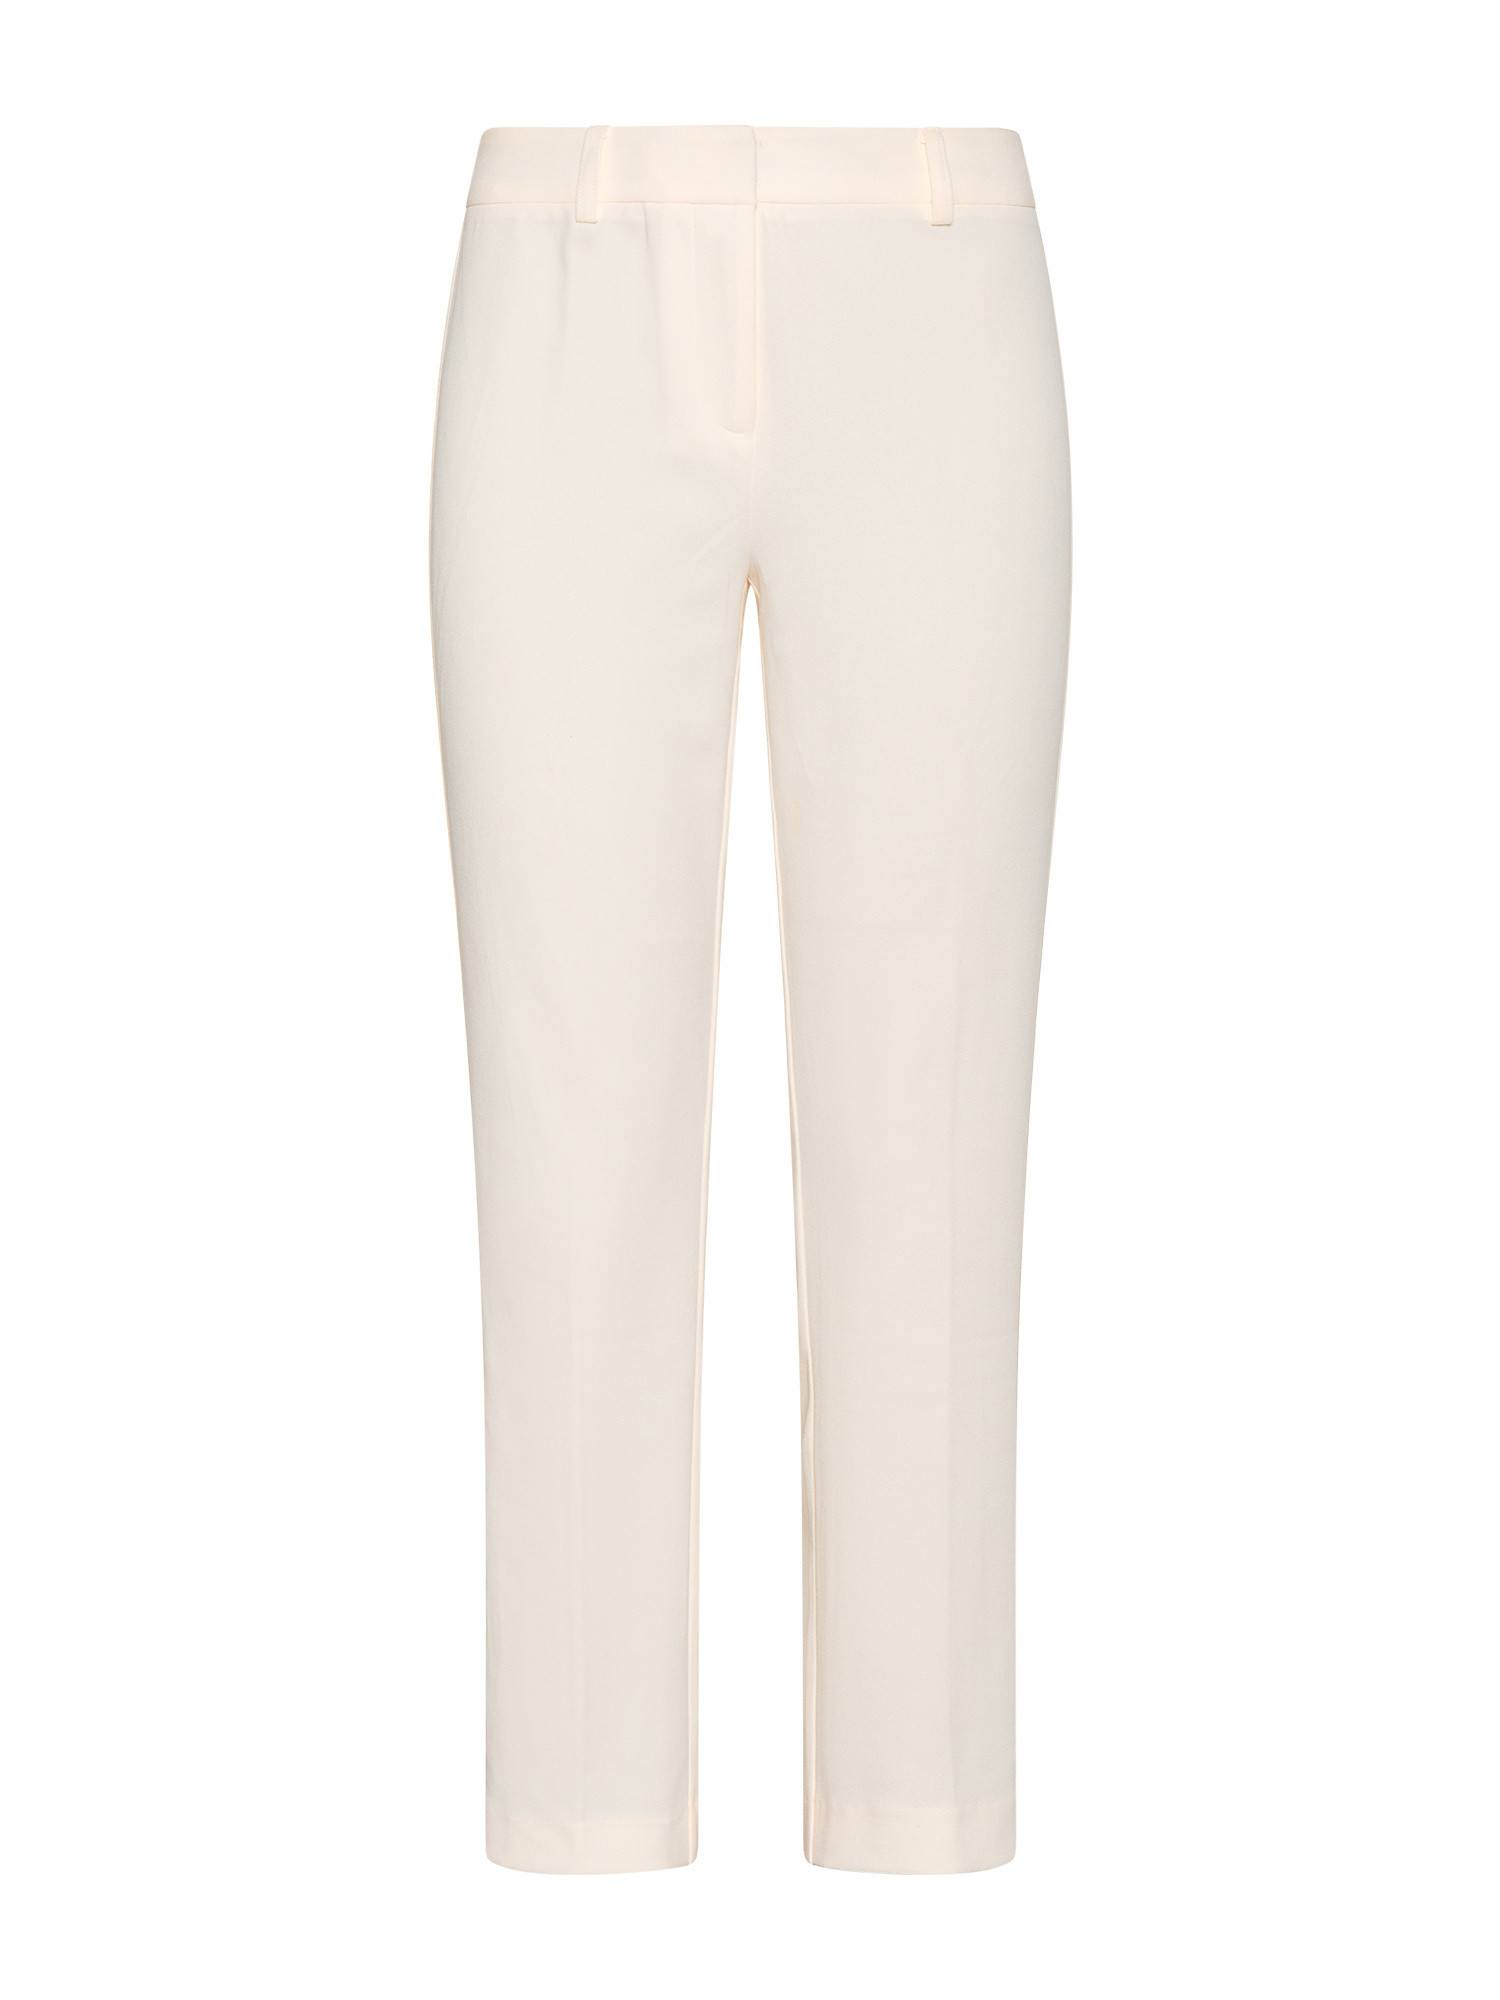 Koan - Pantaloni flare in crepe, Bianco panna, large image number 0